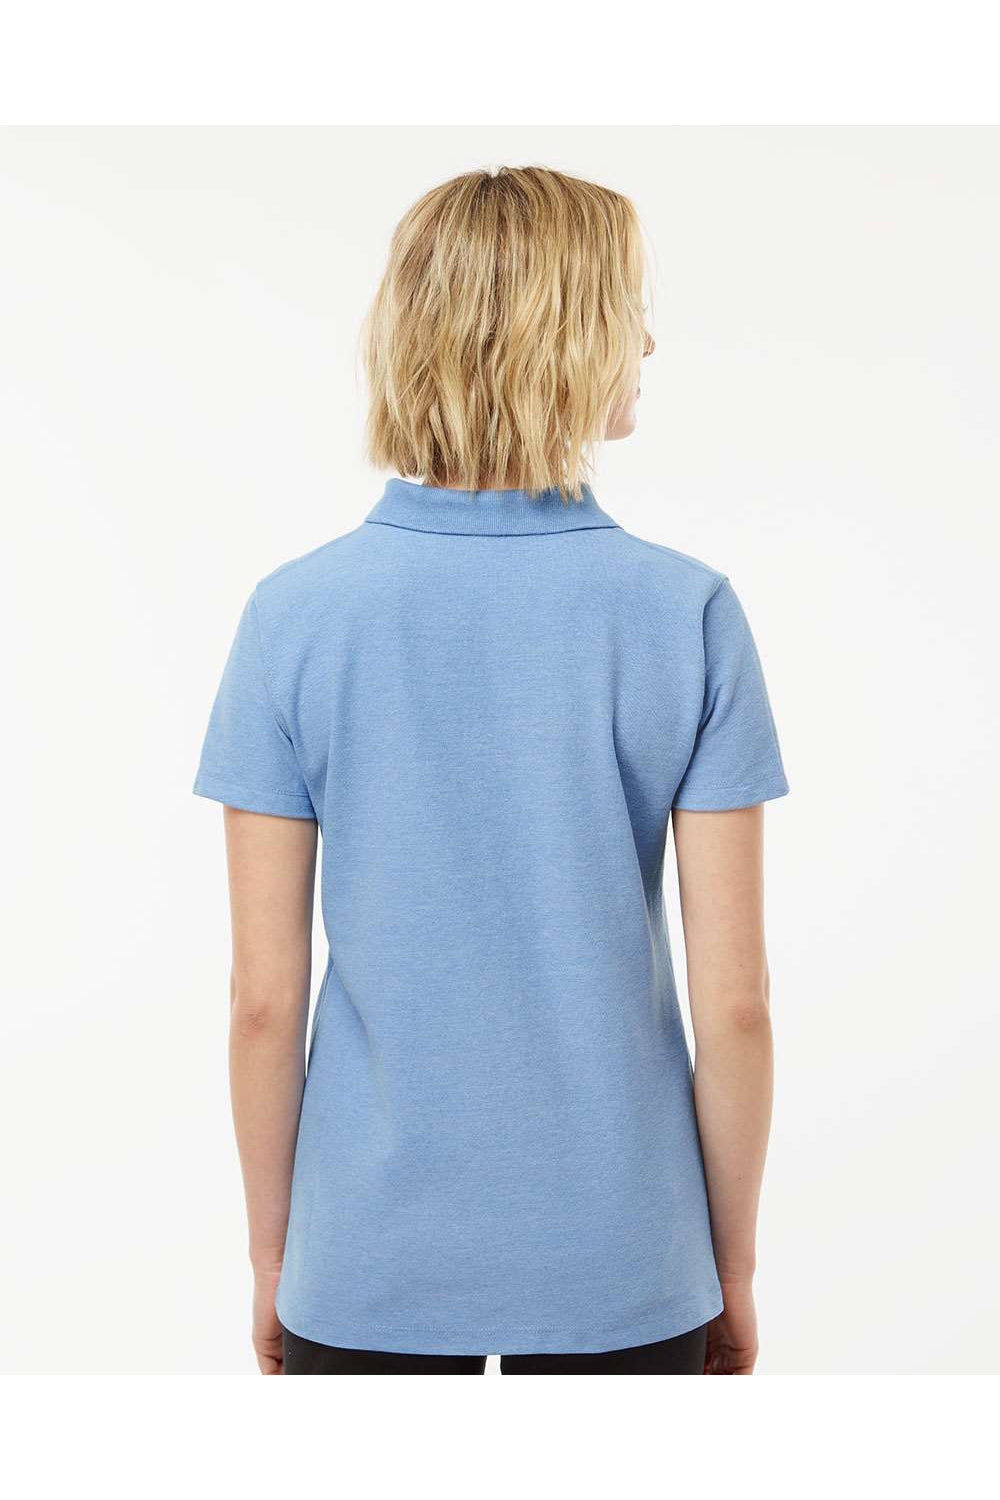 Tultex 401 Womens Sport Shirt Sleeve Polo Shirt Heather Light Blue Model Back